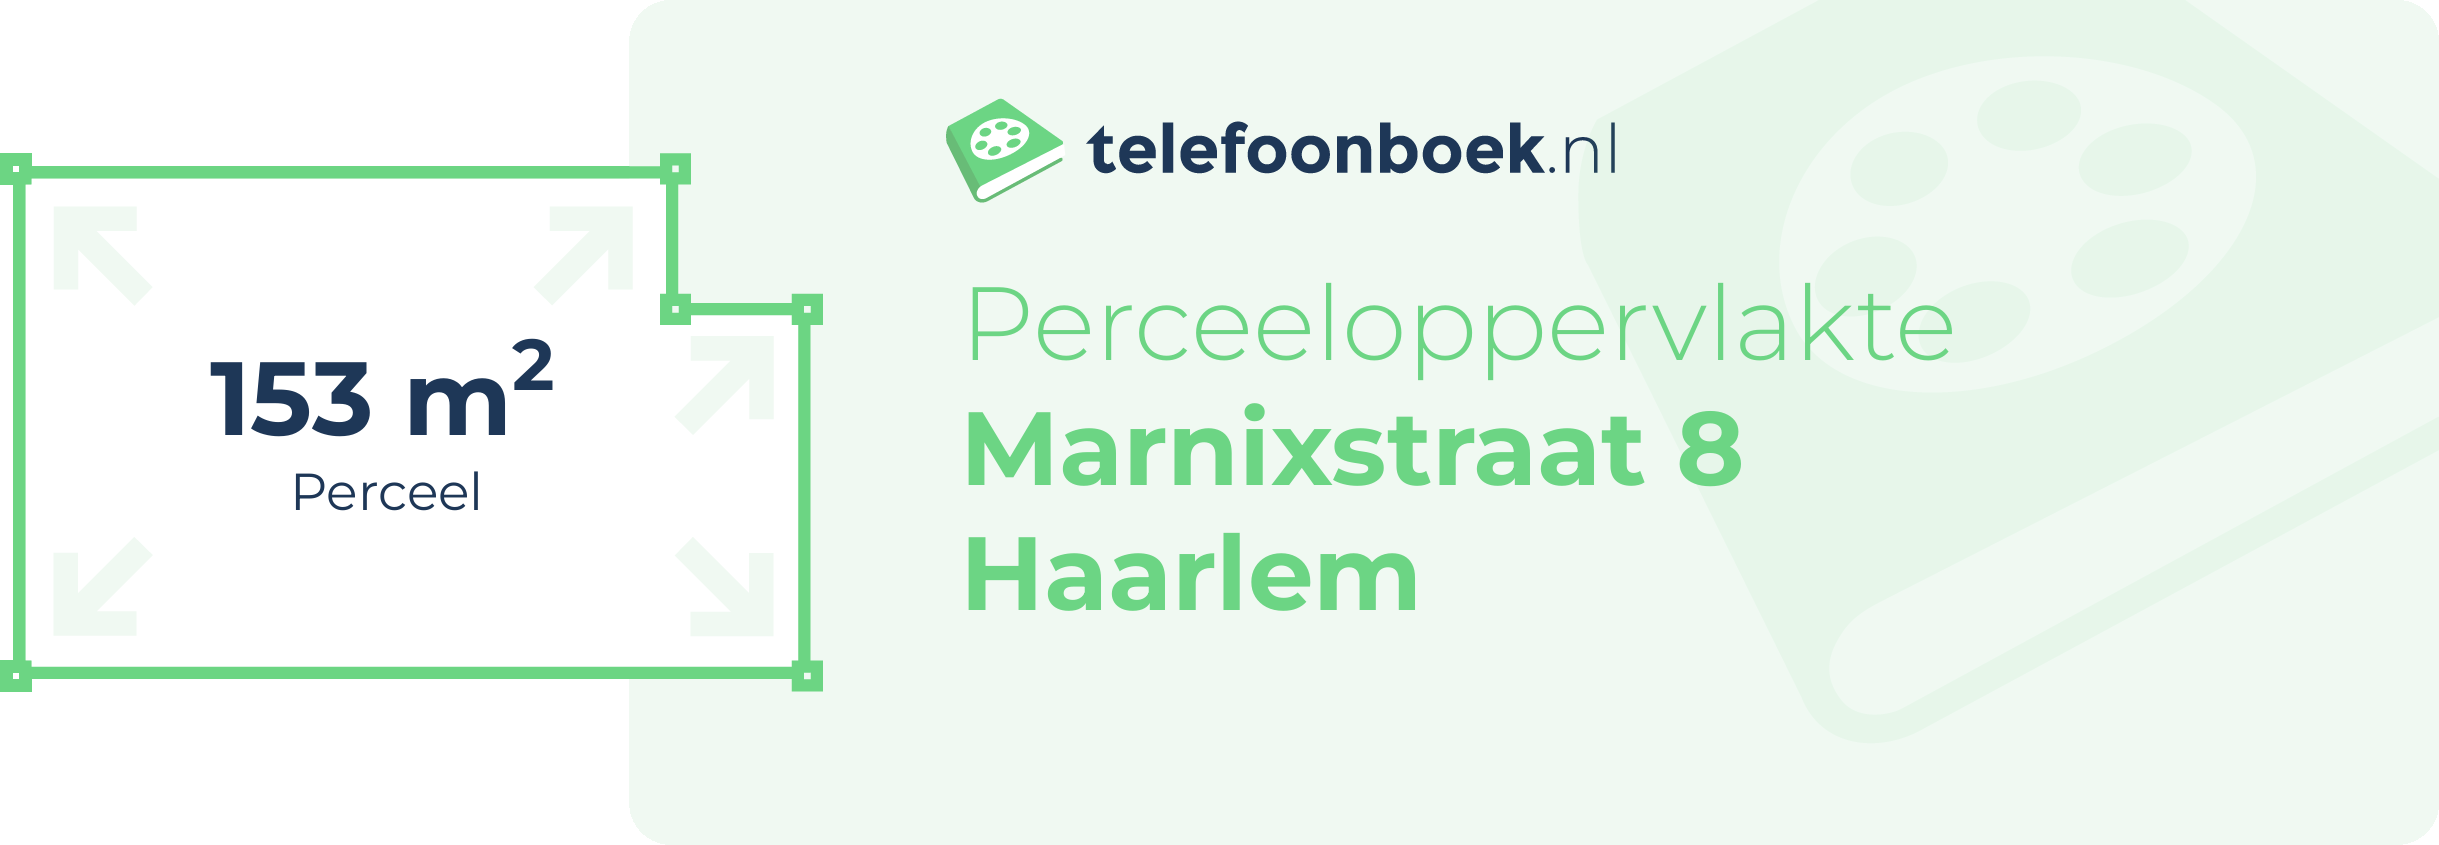 Perceeloppervlakte Marnixstraat 8 Haarlem